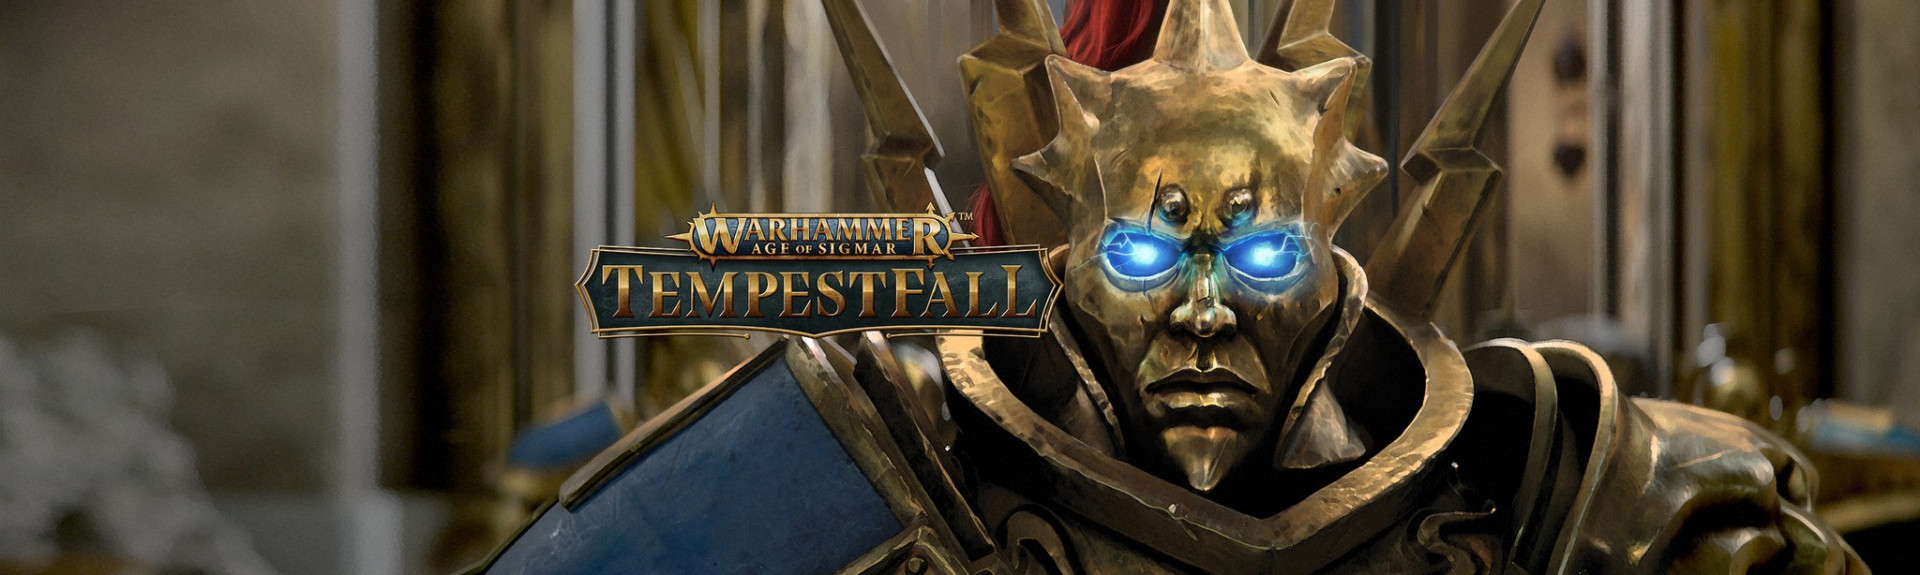 Warhammer Age of Sigmar: Tempestfall - ANÁLISIS QUEST 2